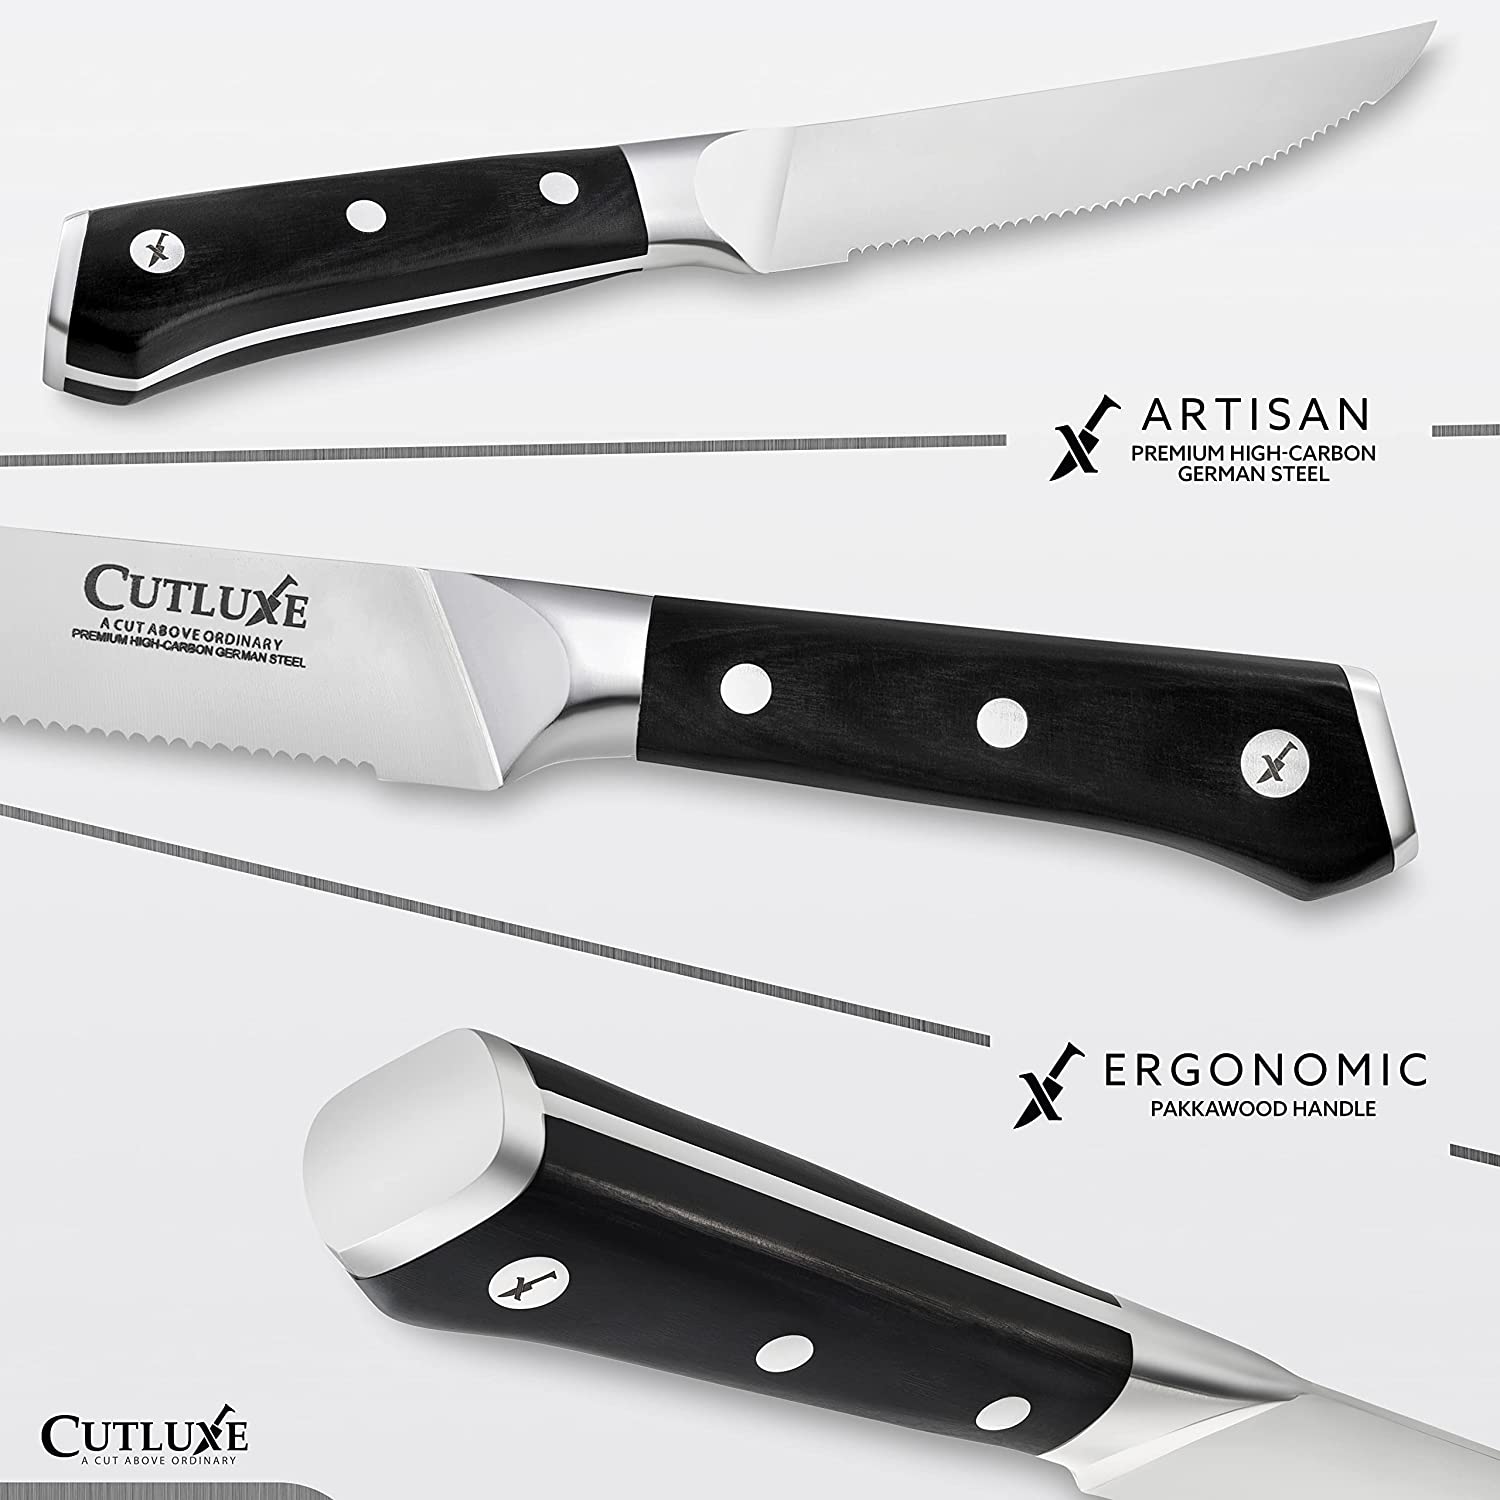 4 Calphalon Contemporary Micro Serrated Steak Knives Black Handle 4.5  China